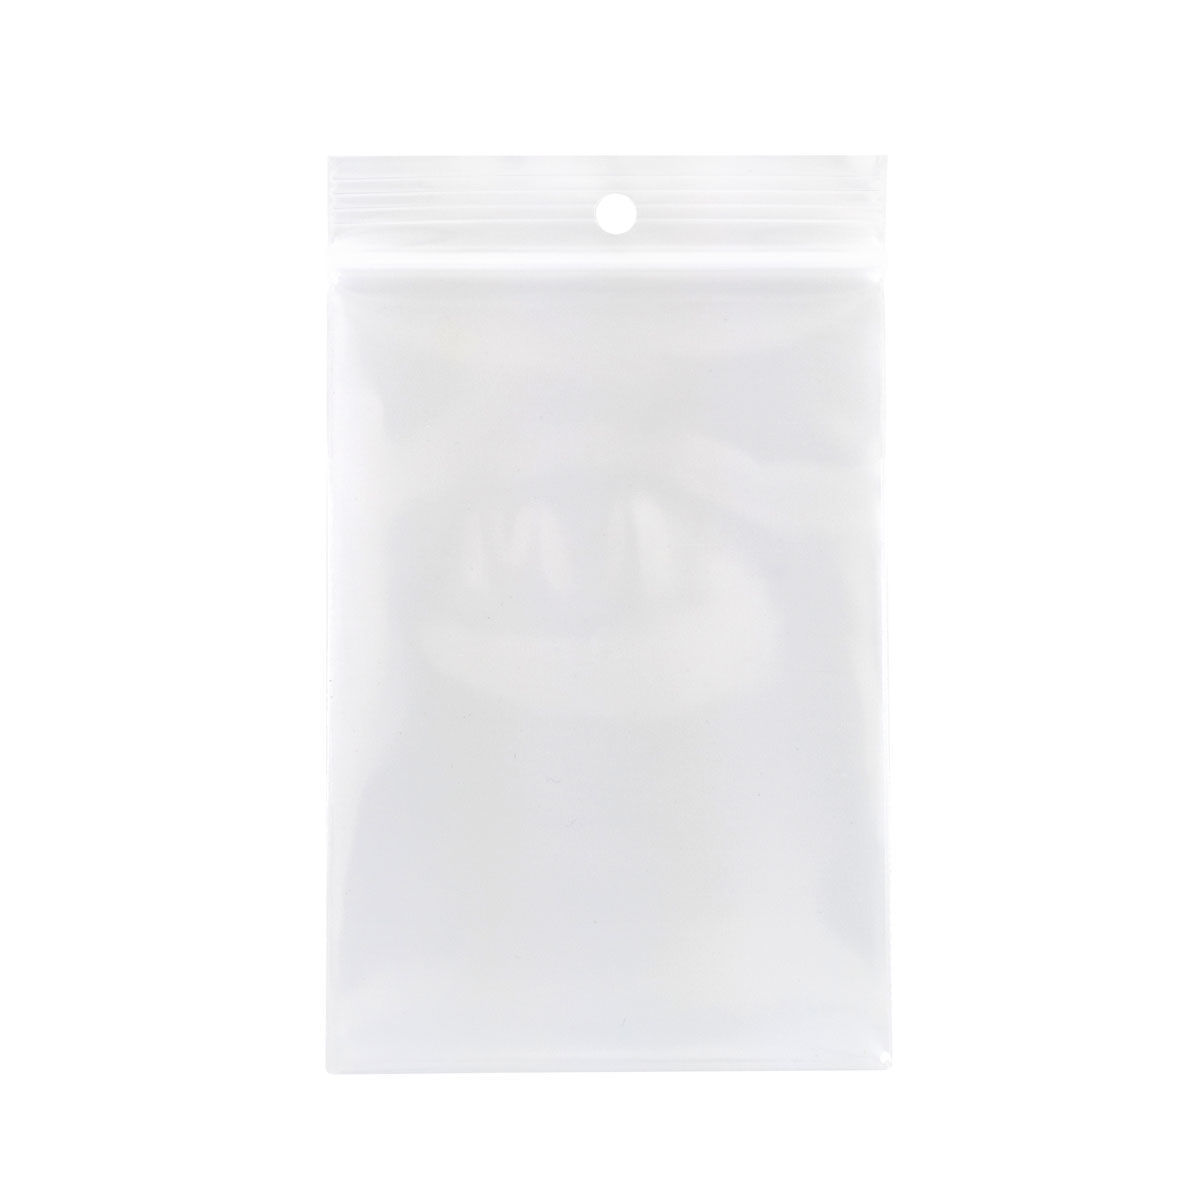 Tiny Polythene Bag Zip Seal Packs of 100 Pcs Size 60 x 60mm 